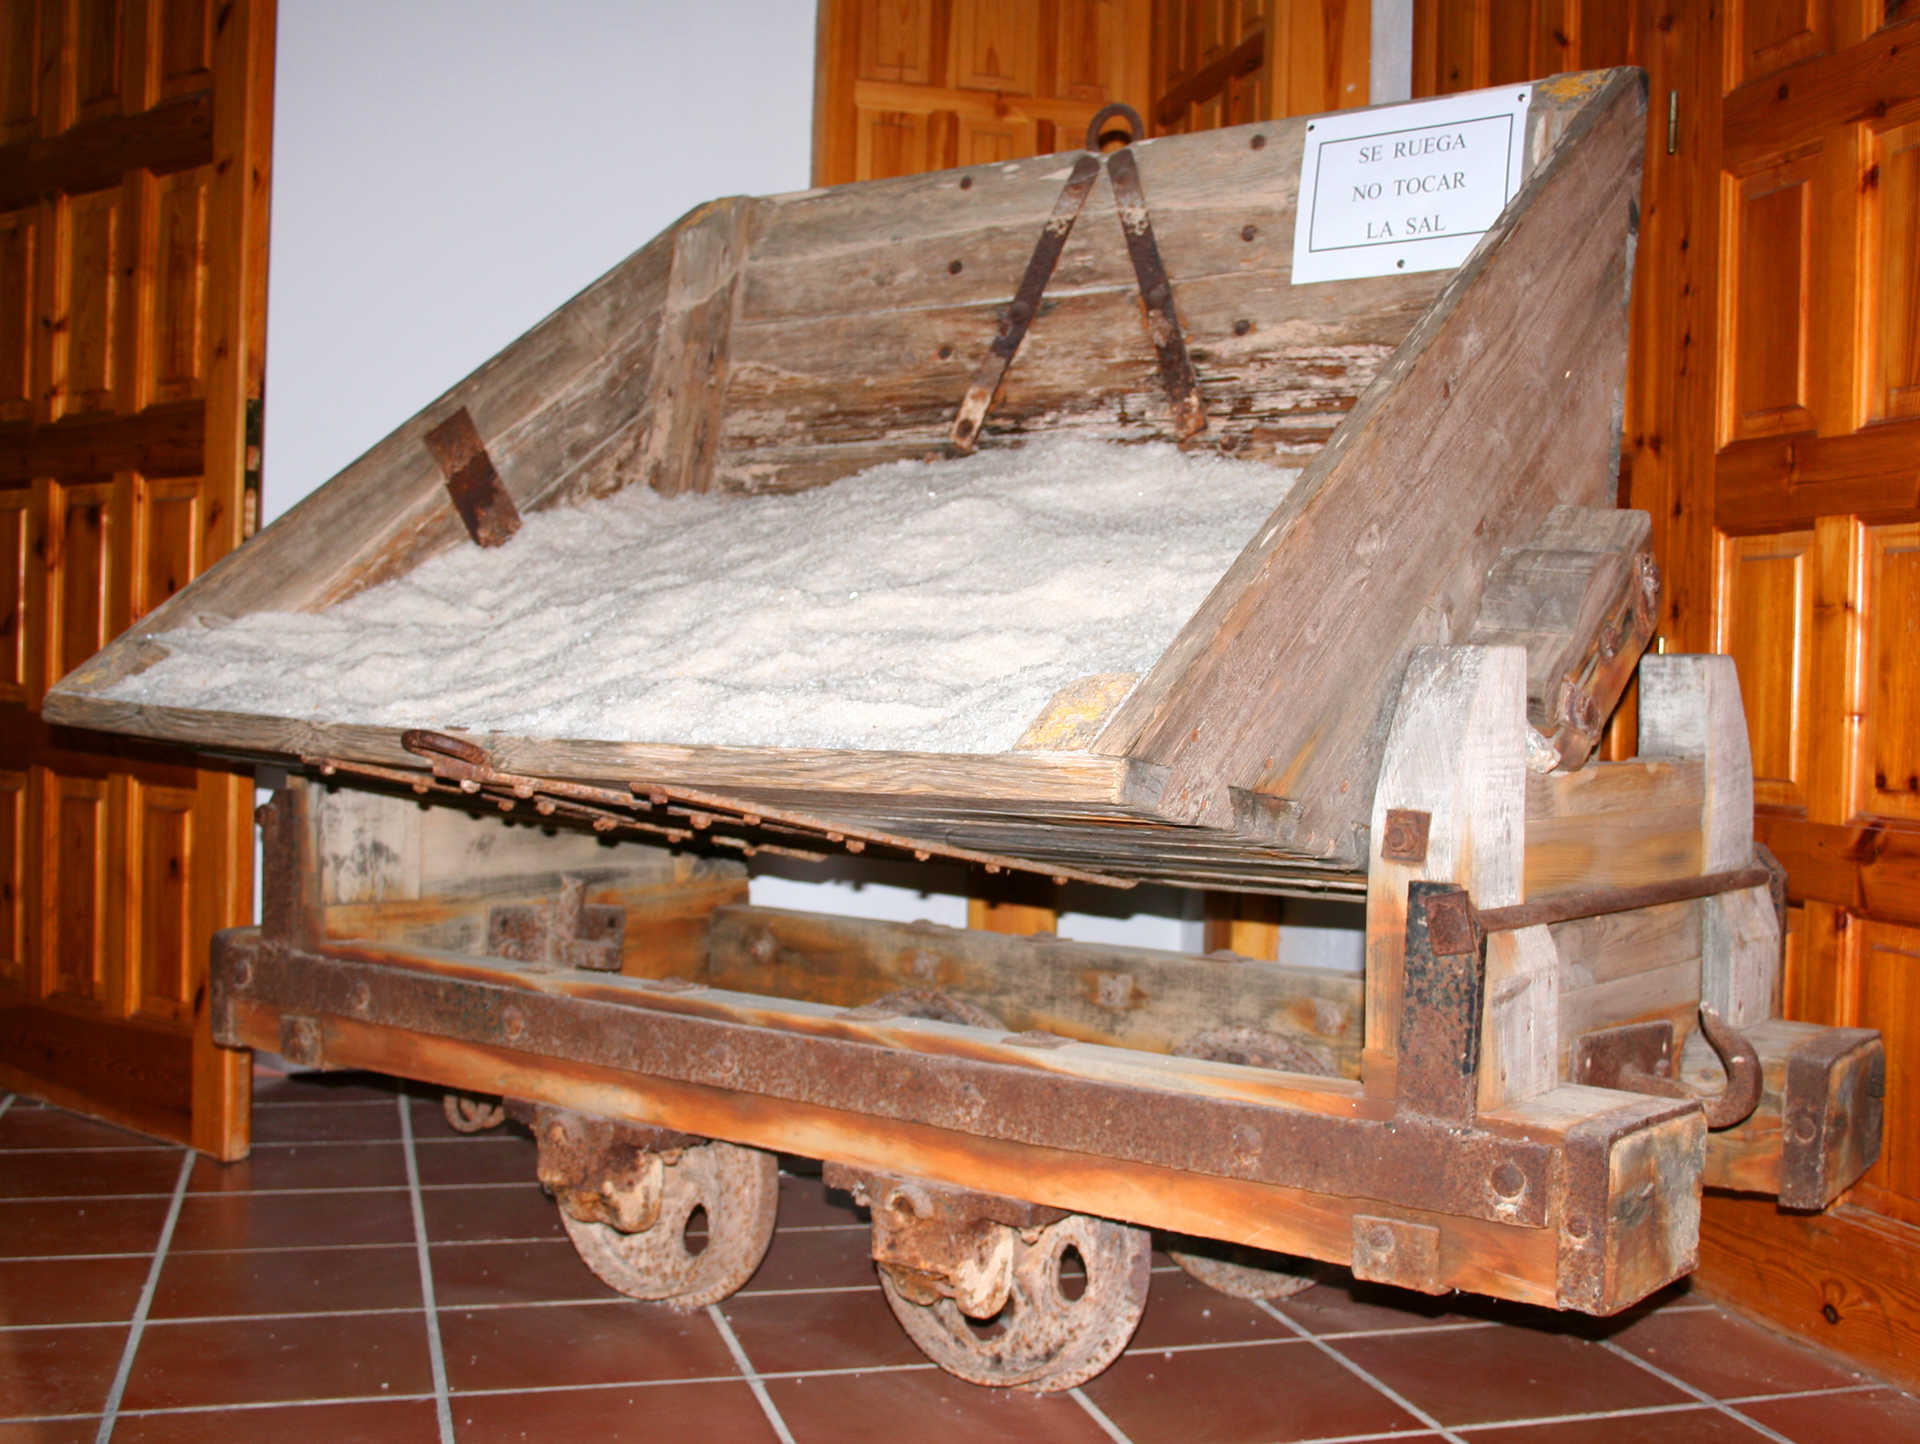 Museum des Salzs